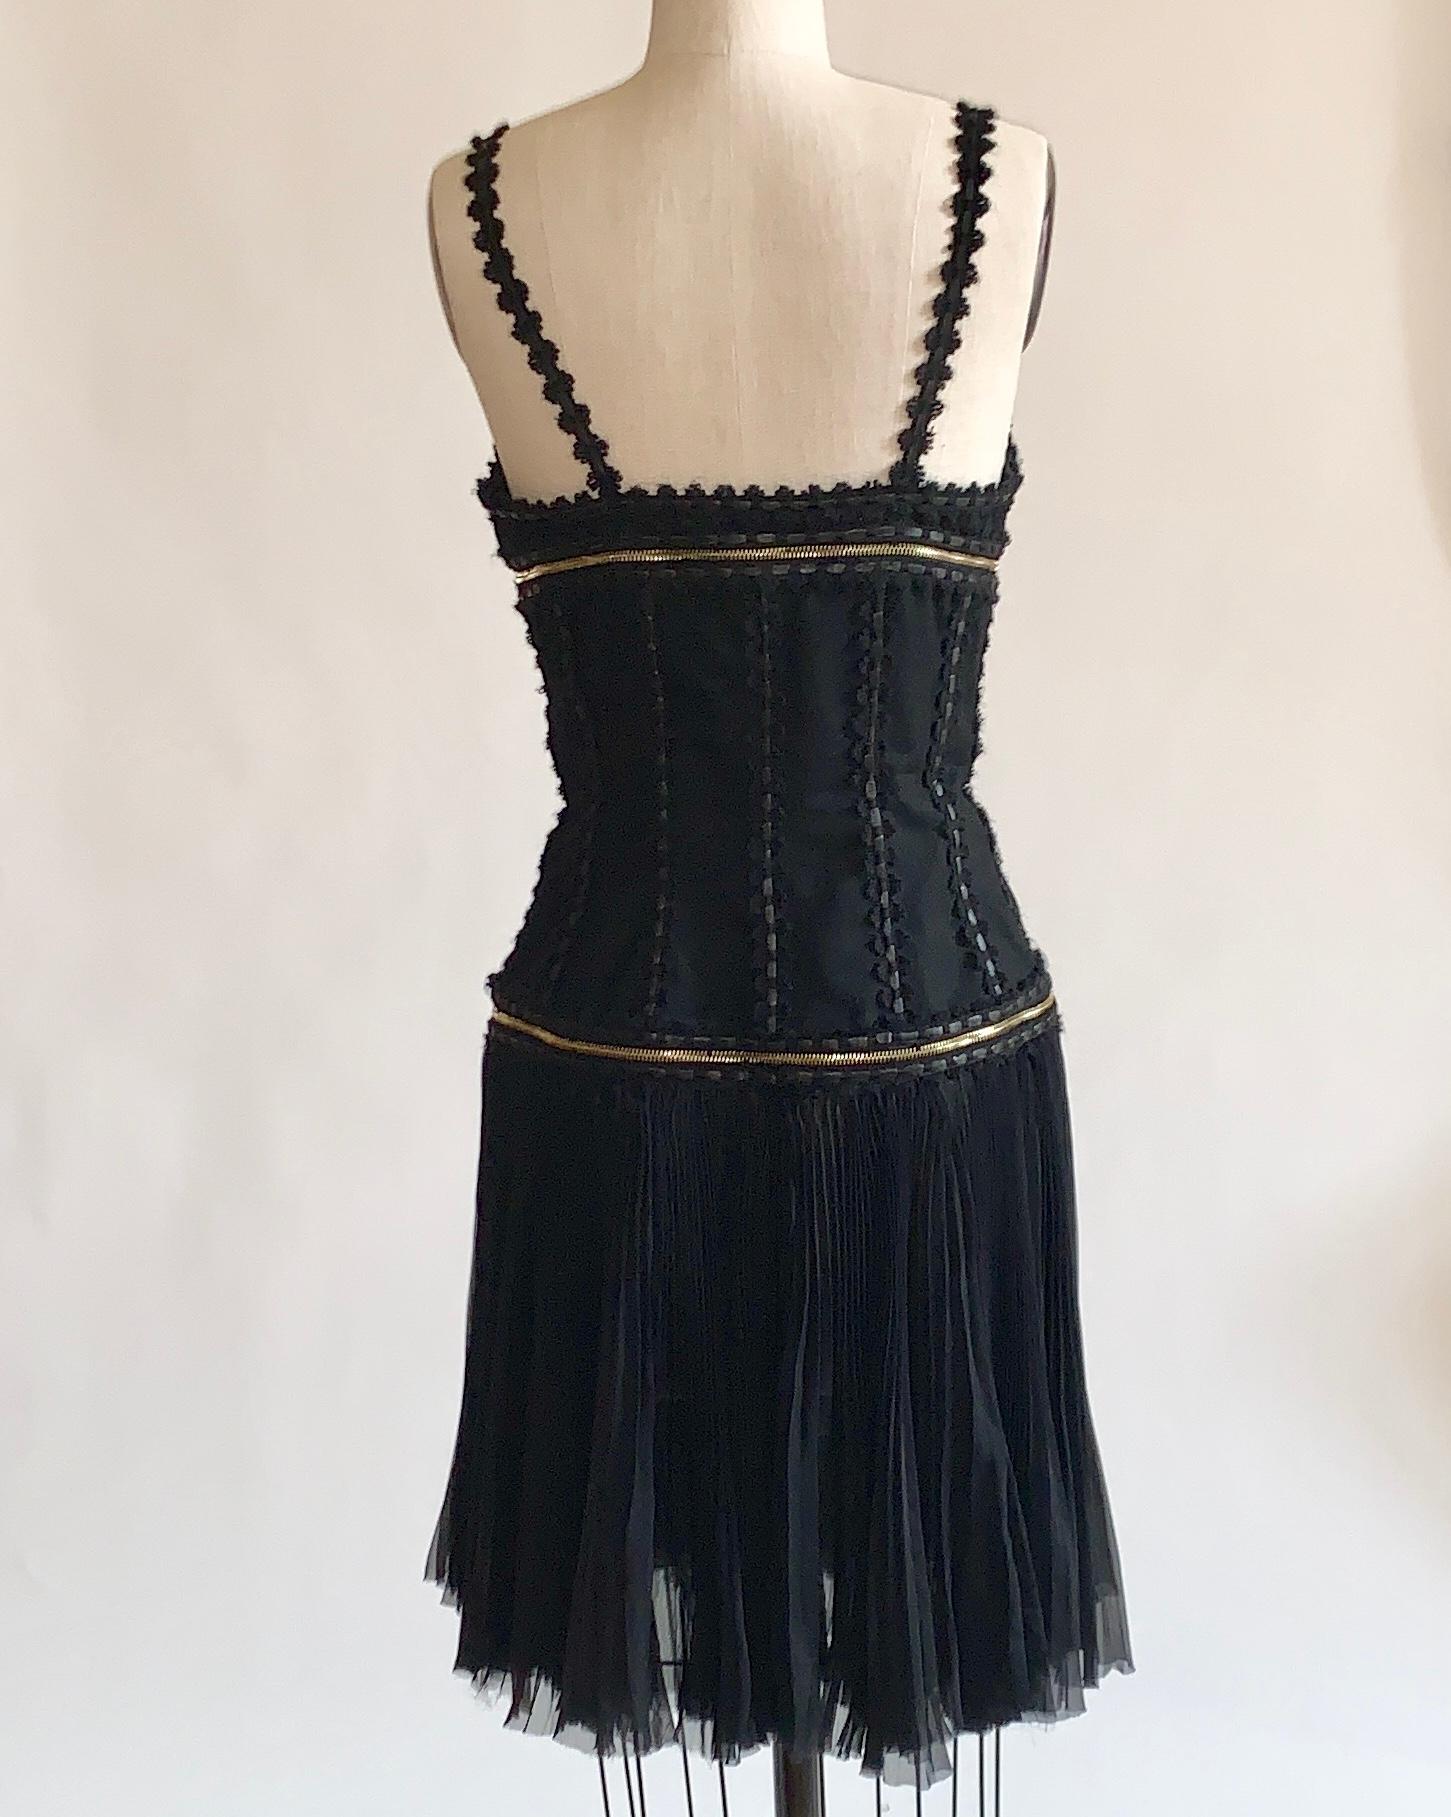 Women's Alexander McQueen 2003 Convertible Lock and Key Dress in Black Wool Silk